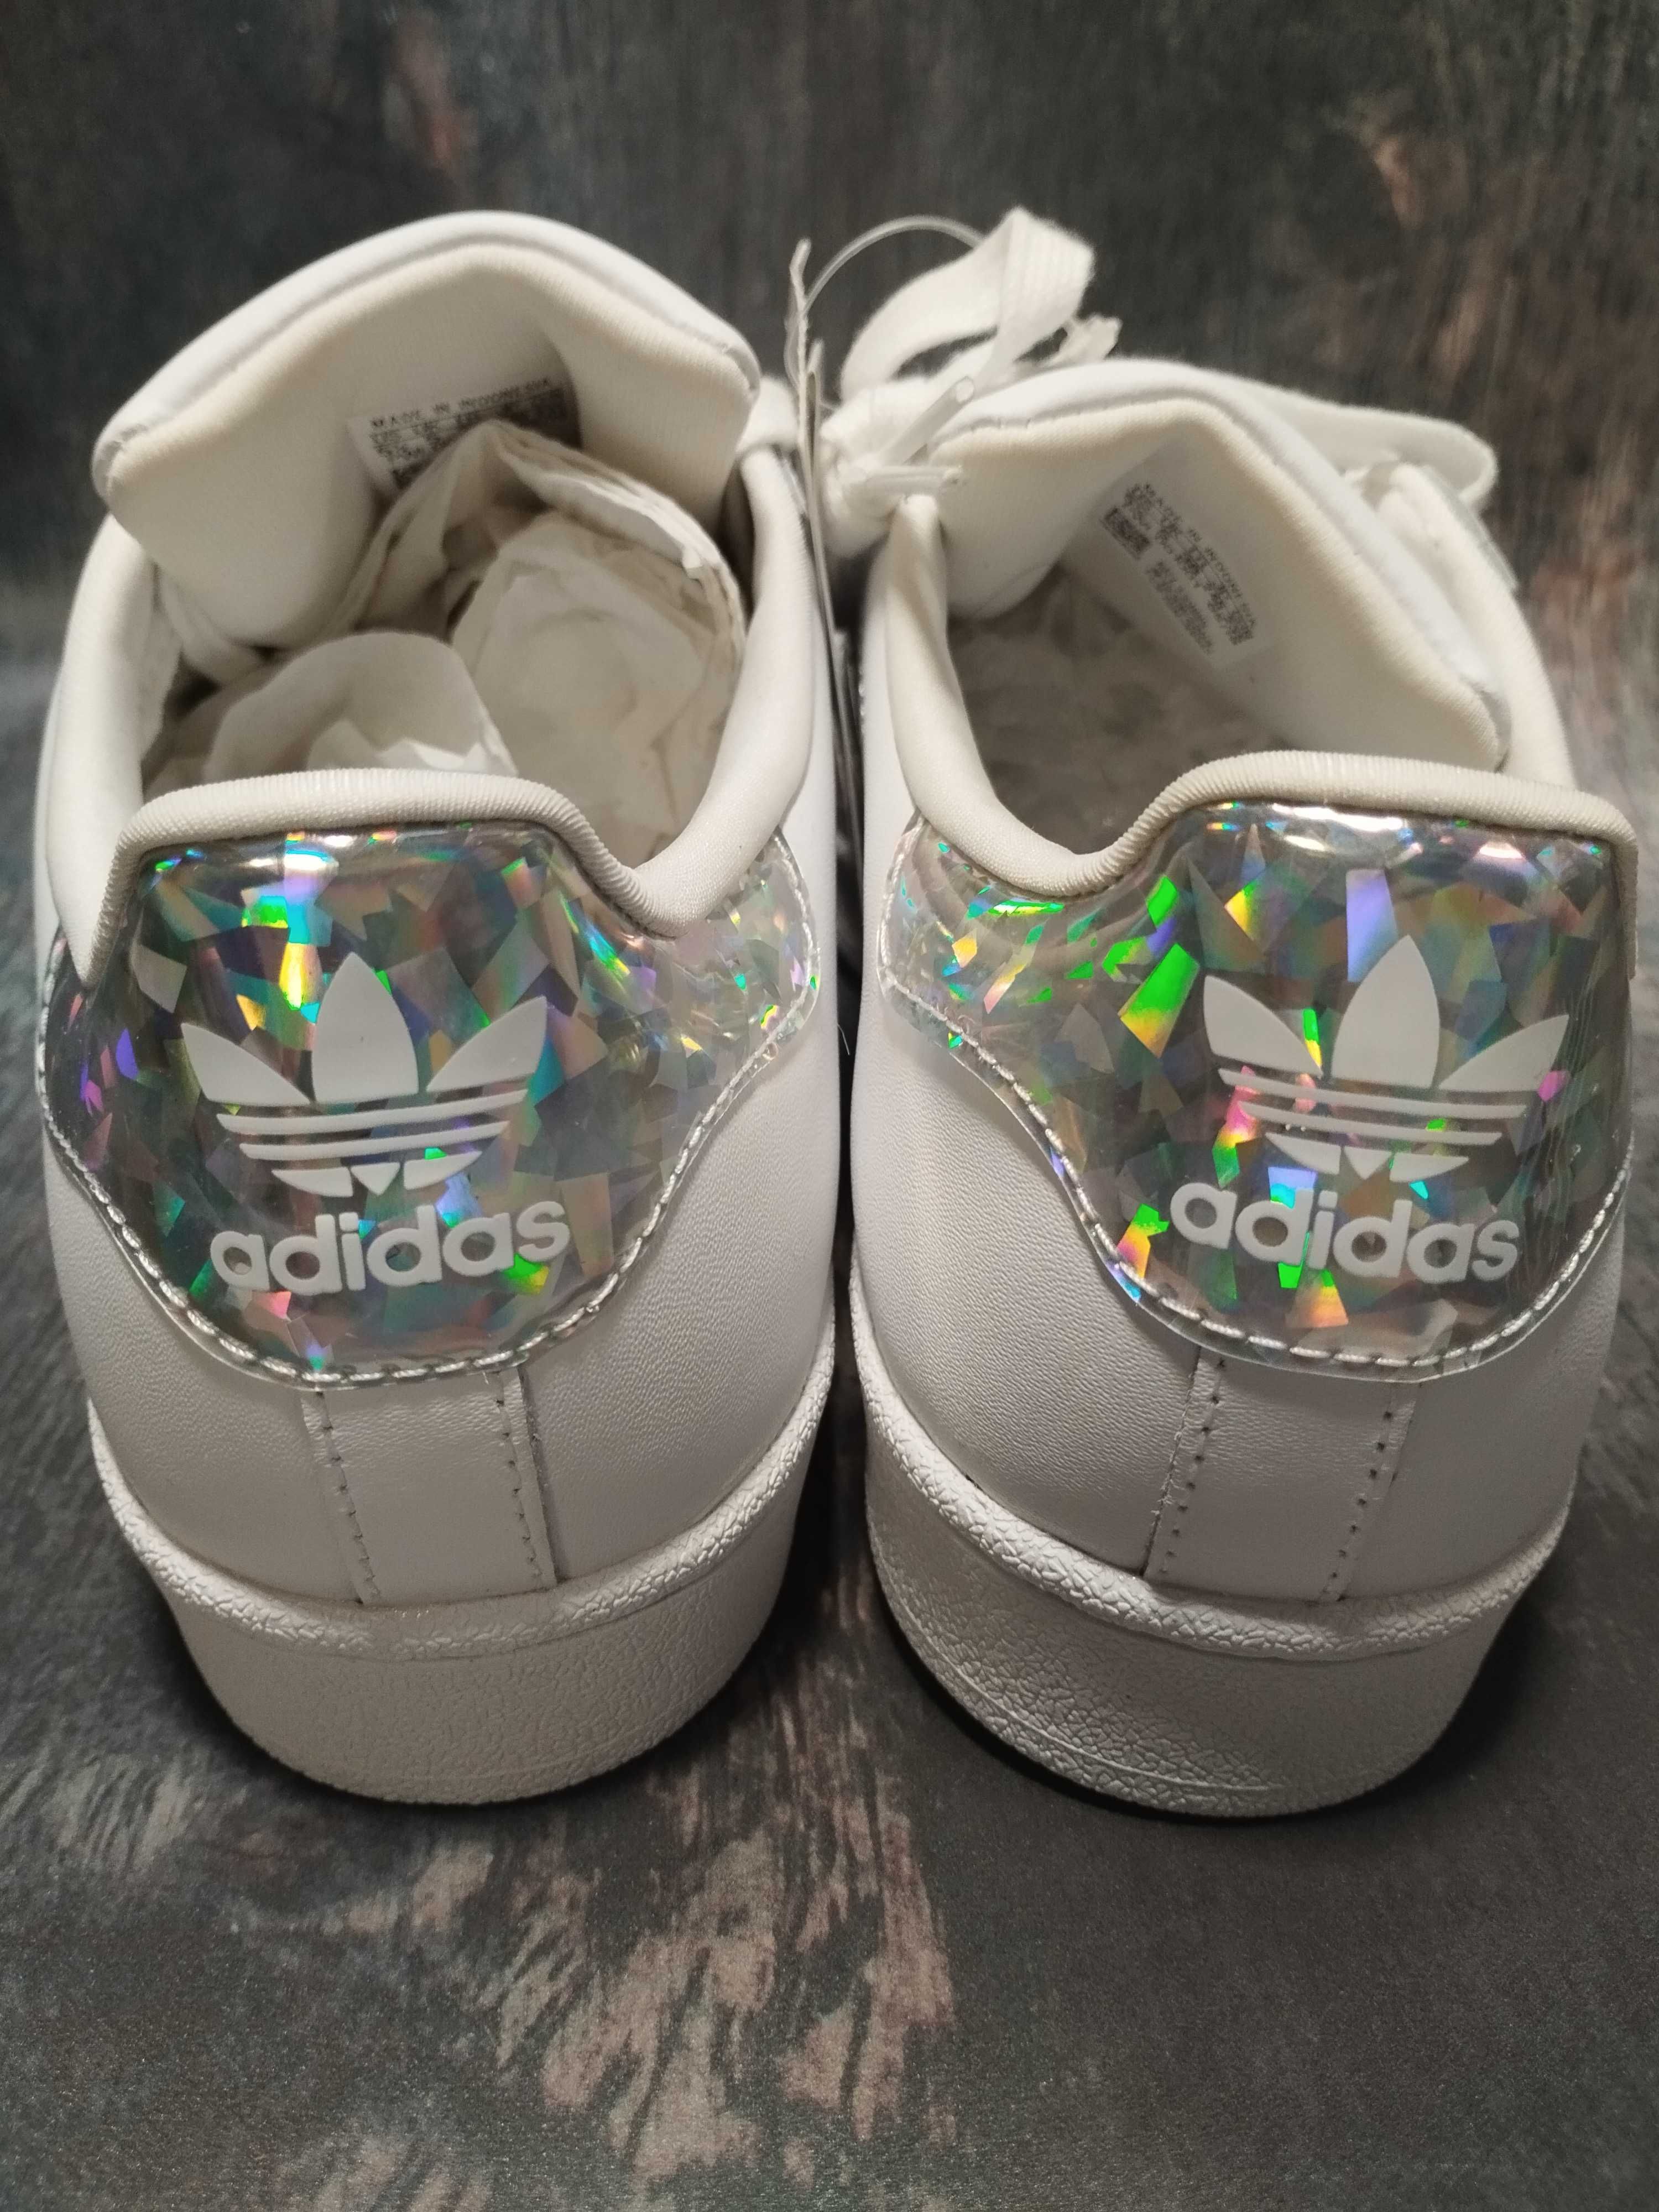 Nowe i oryginalne buty Adidasy Superstar z Hologramem